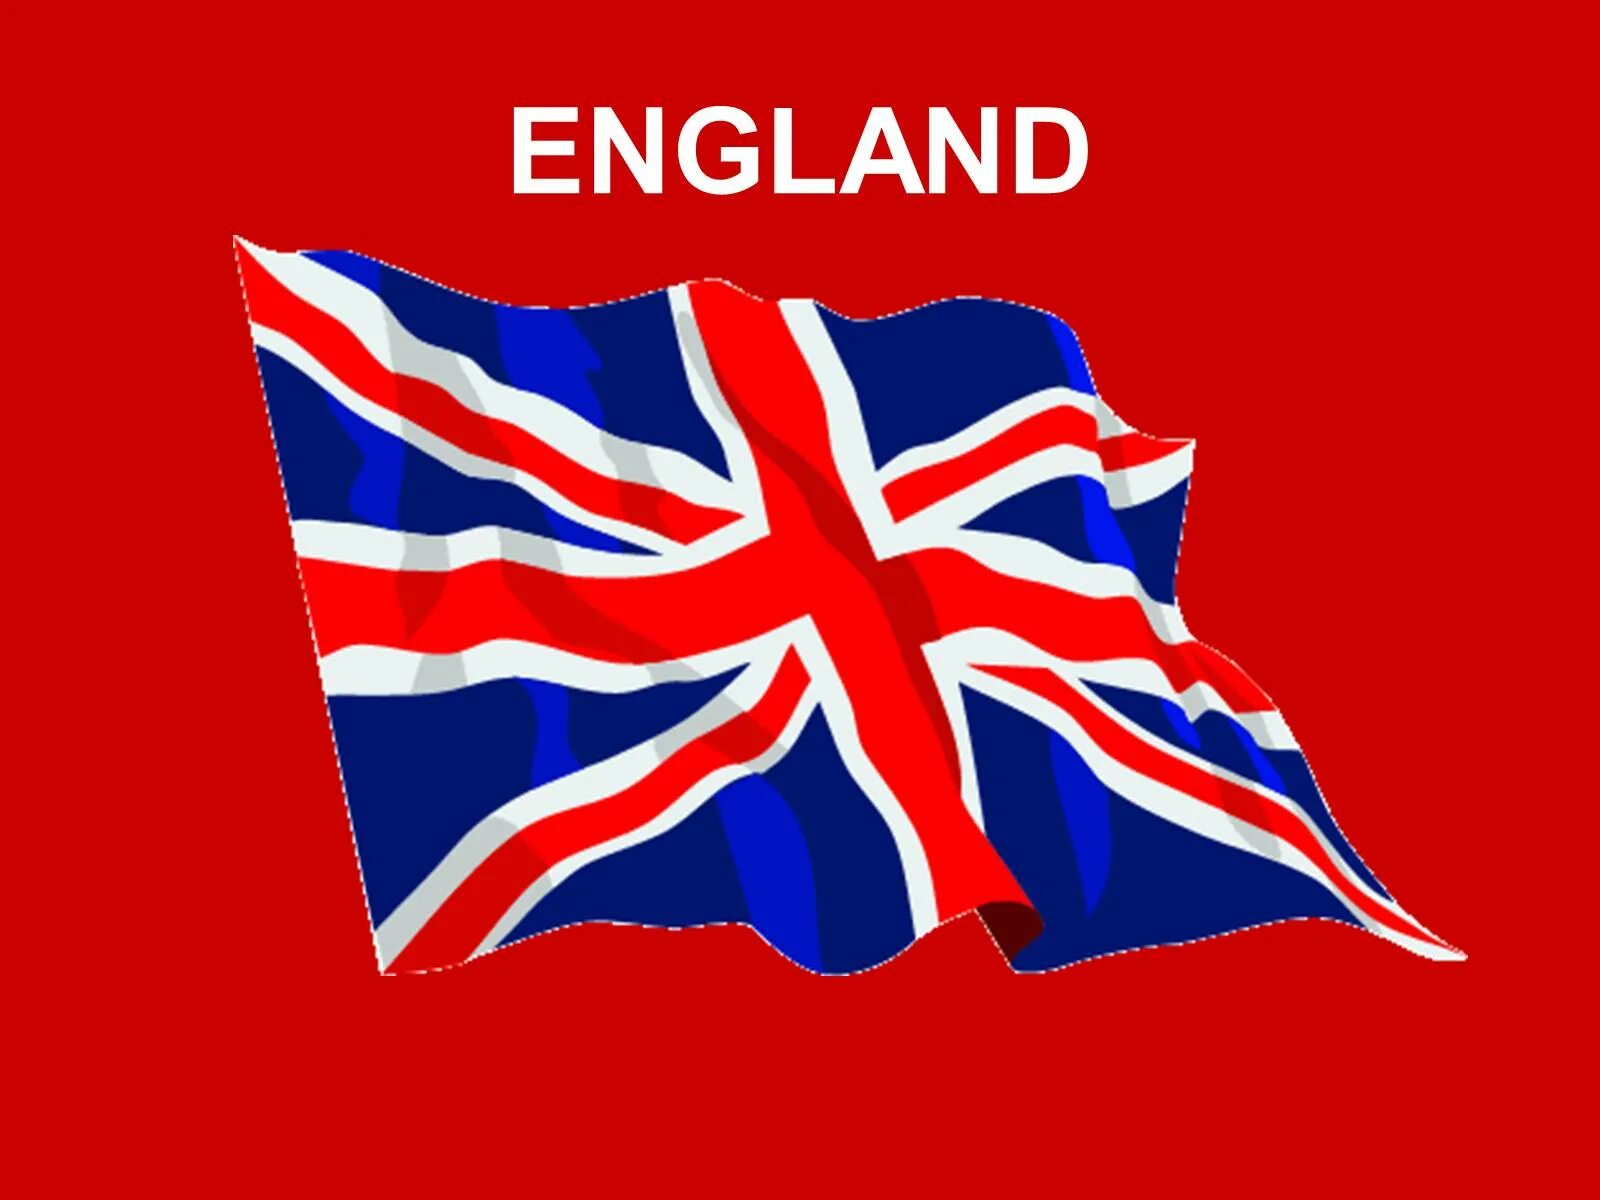 English txt. England презентация. Presentation about England. Ppt about England. England presentation in English.